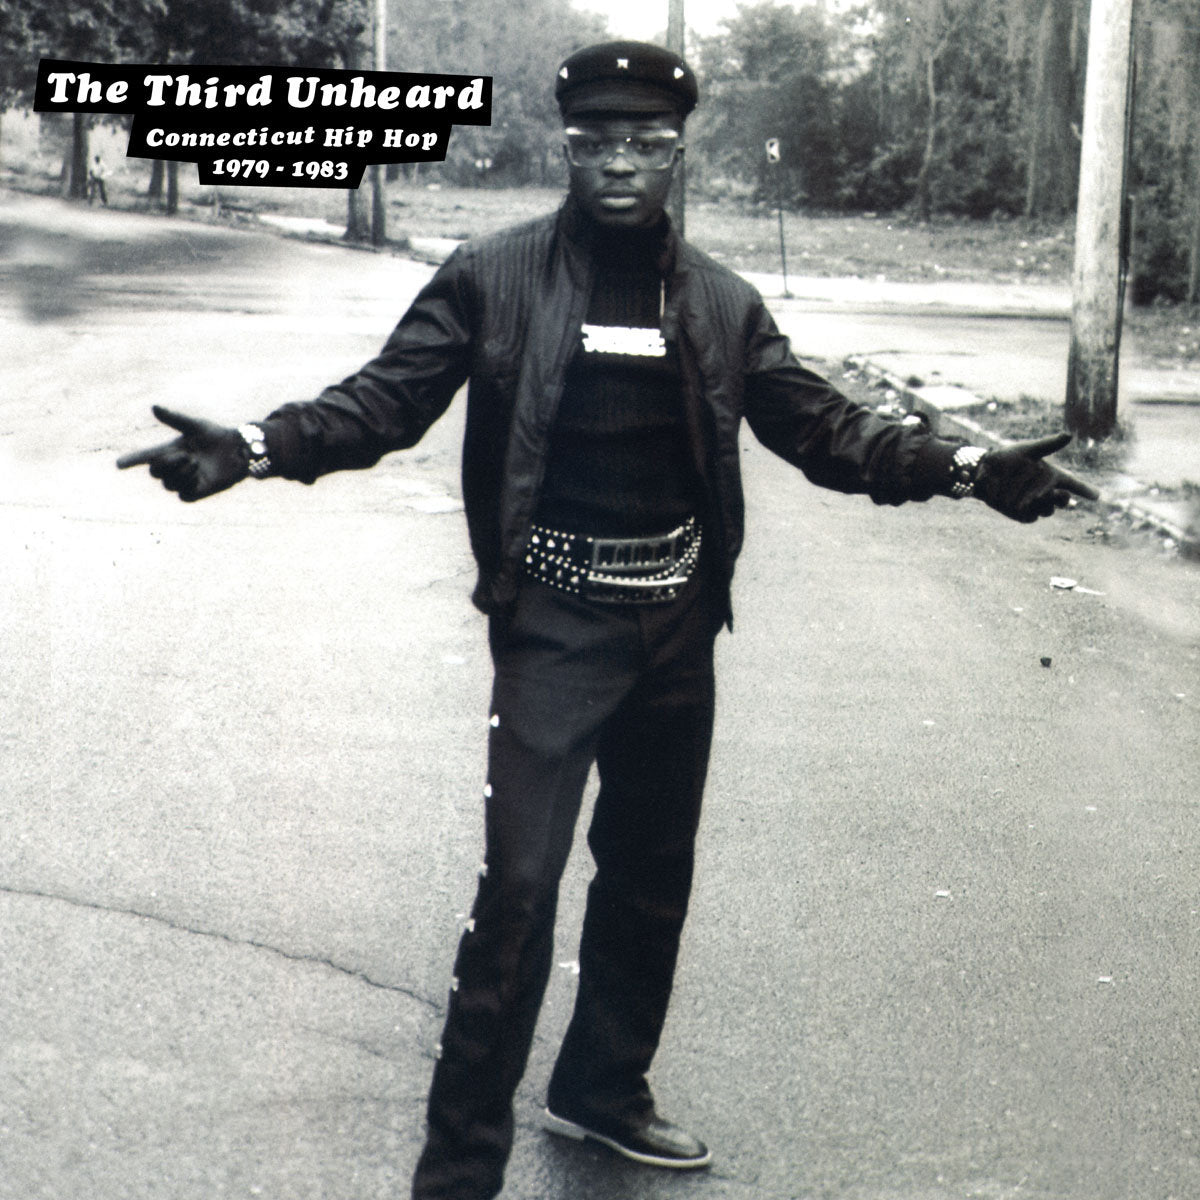 V/A - The Third Unheard, Connecticut Hip Hop 1979-1983, CD